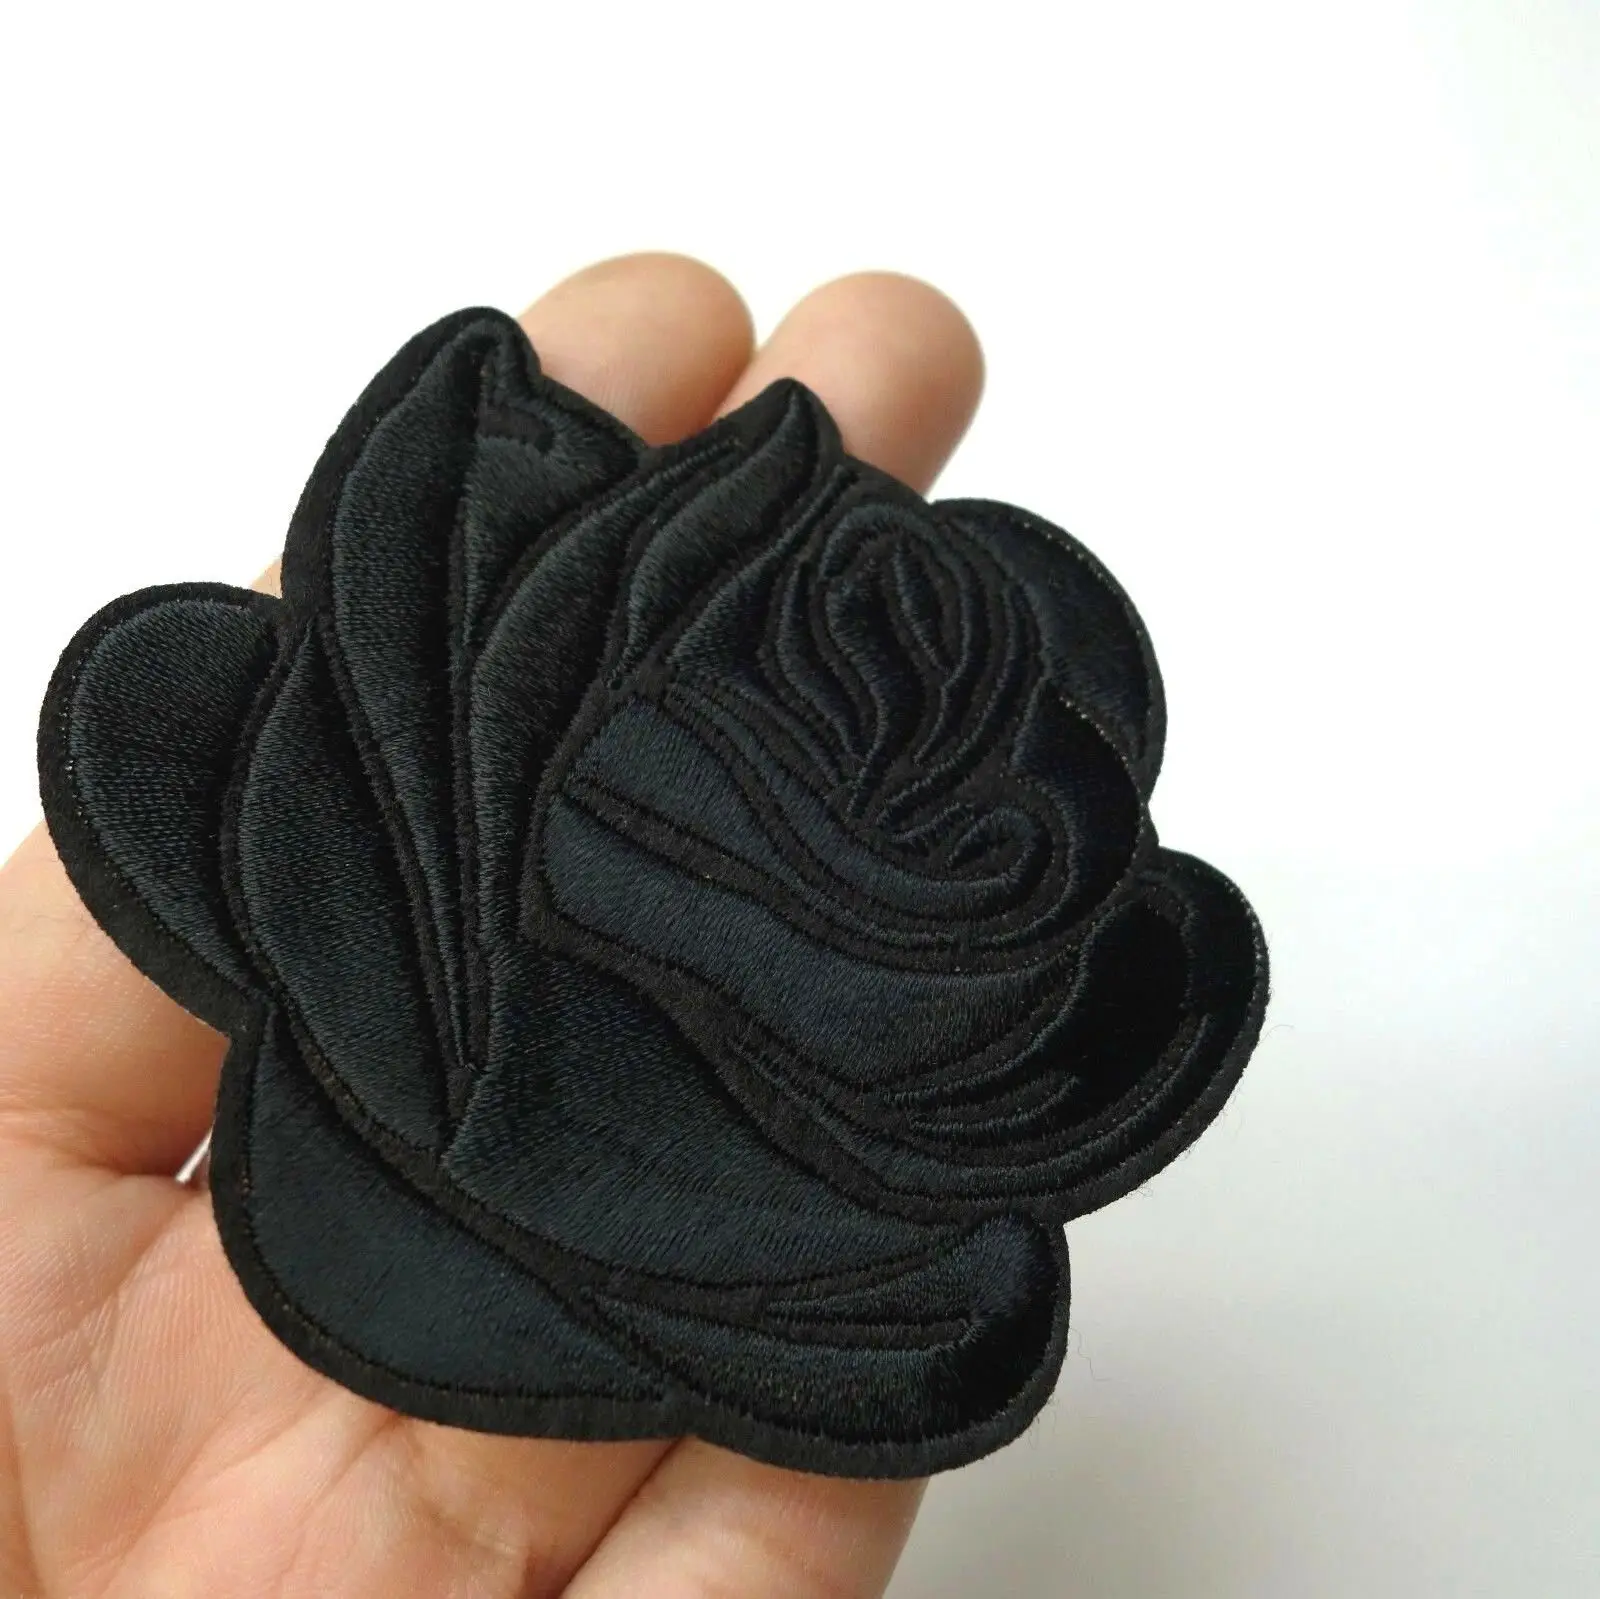 

Hot! Black Rose Iron On Embroidered Patch, Applique Motif - Goth Punk Alt Emo (≈ 7.6-7.4 cm )